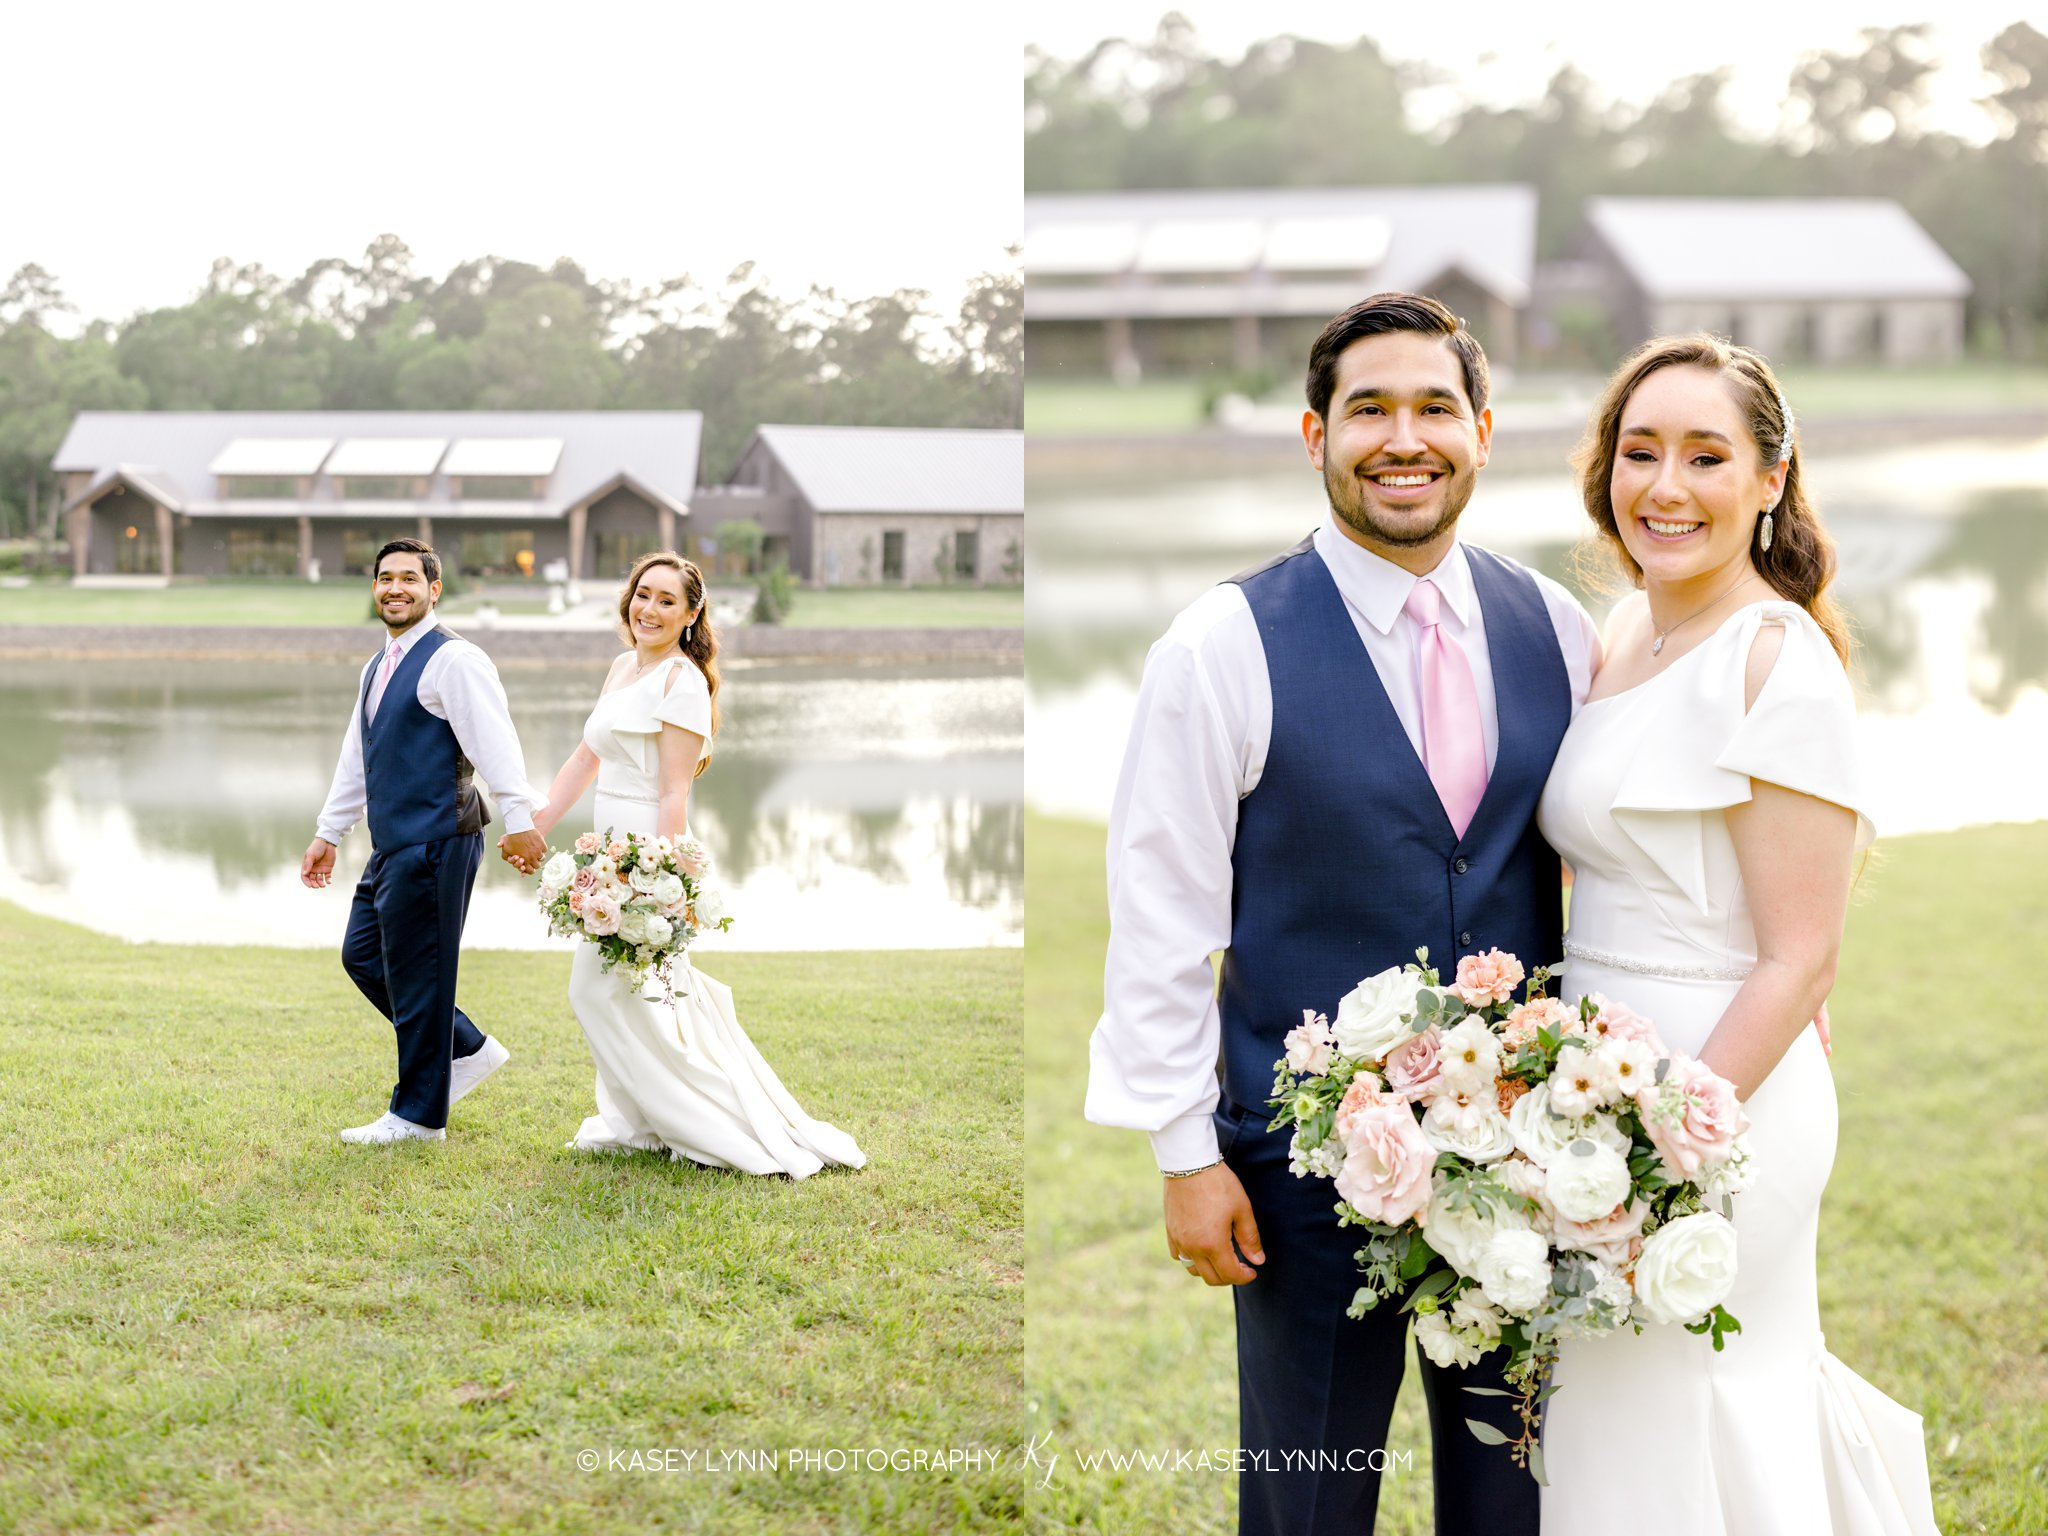 The Luminaire Wedding photographer / Kasey Lynn Photography